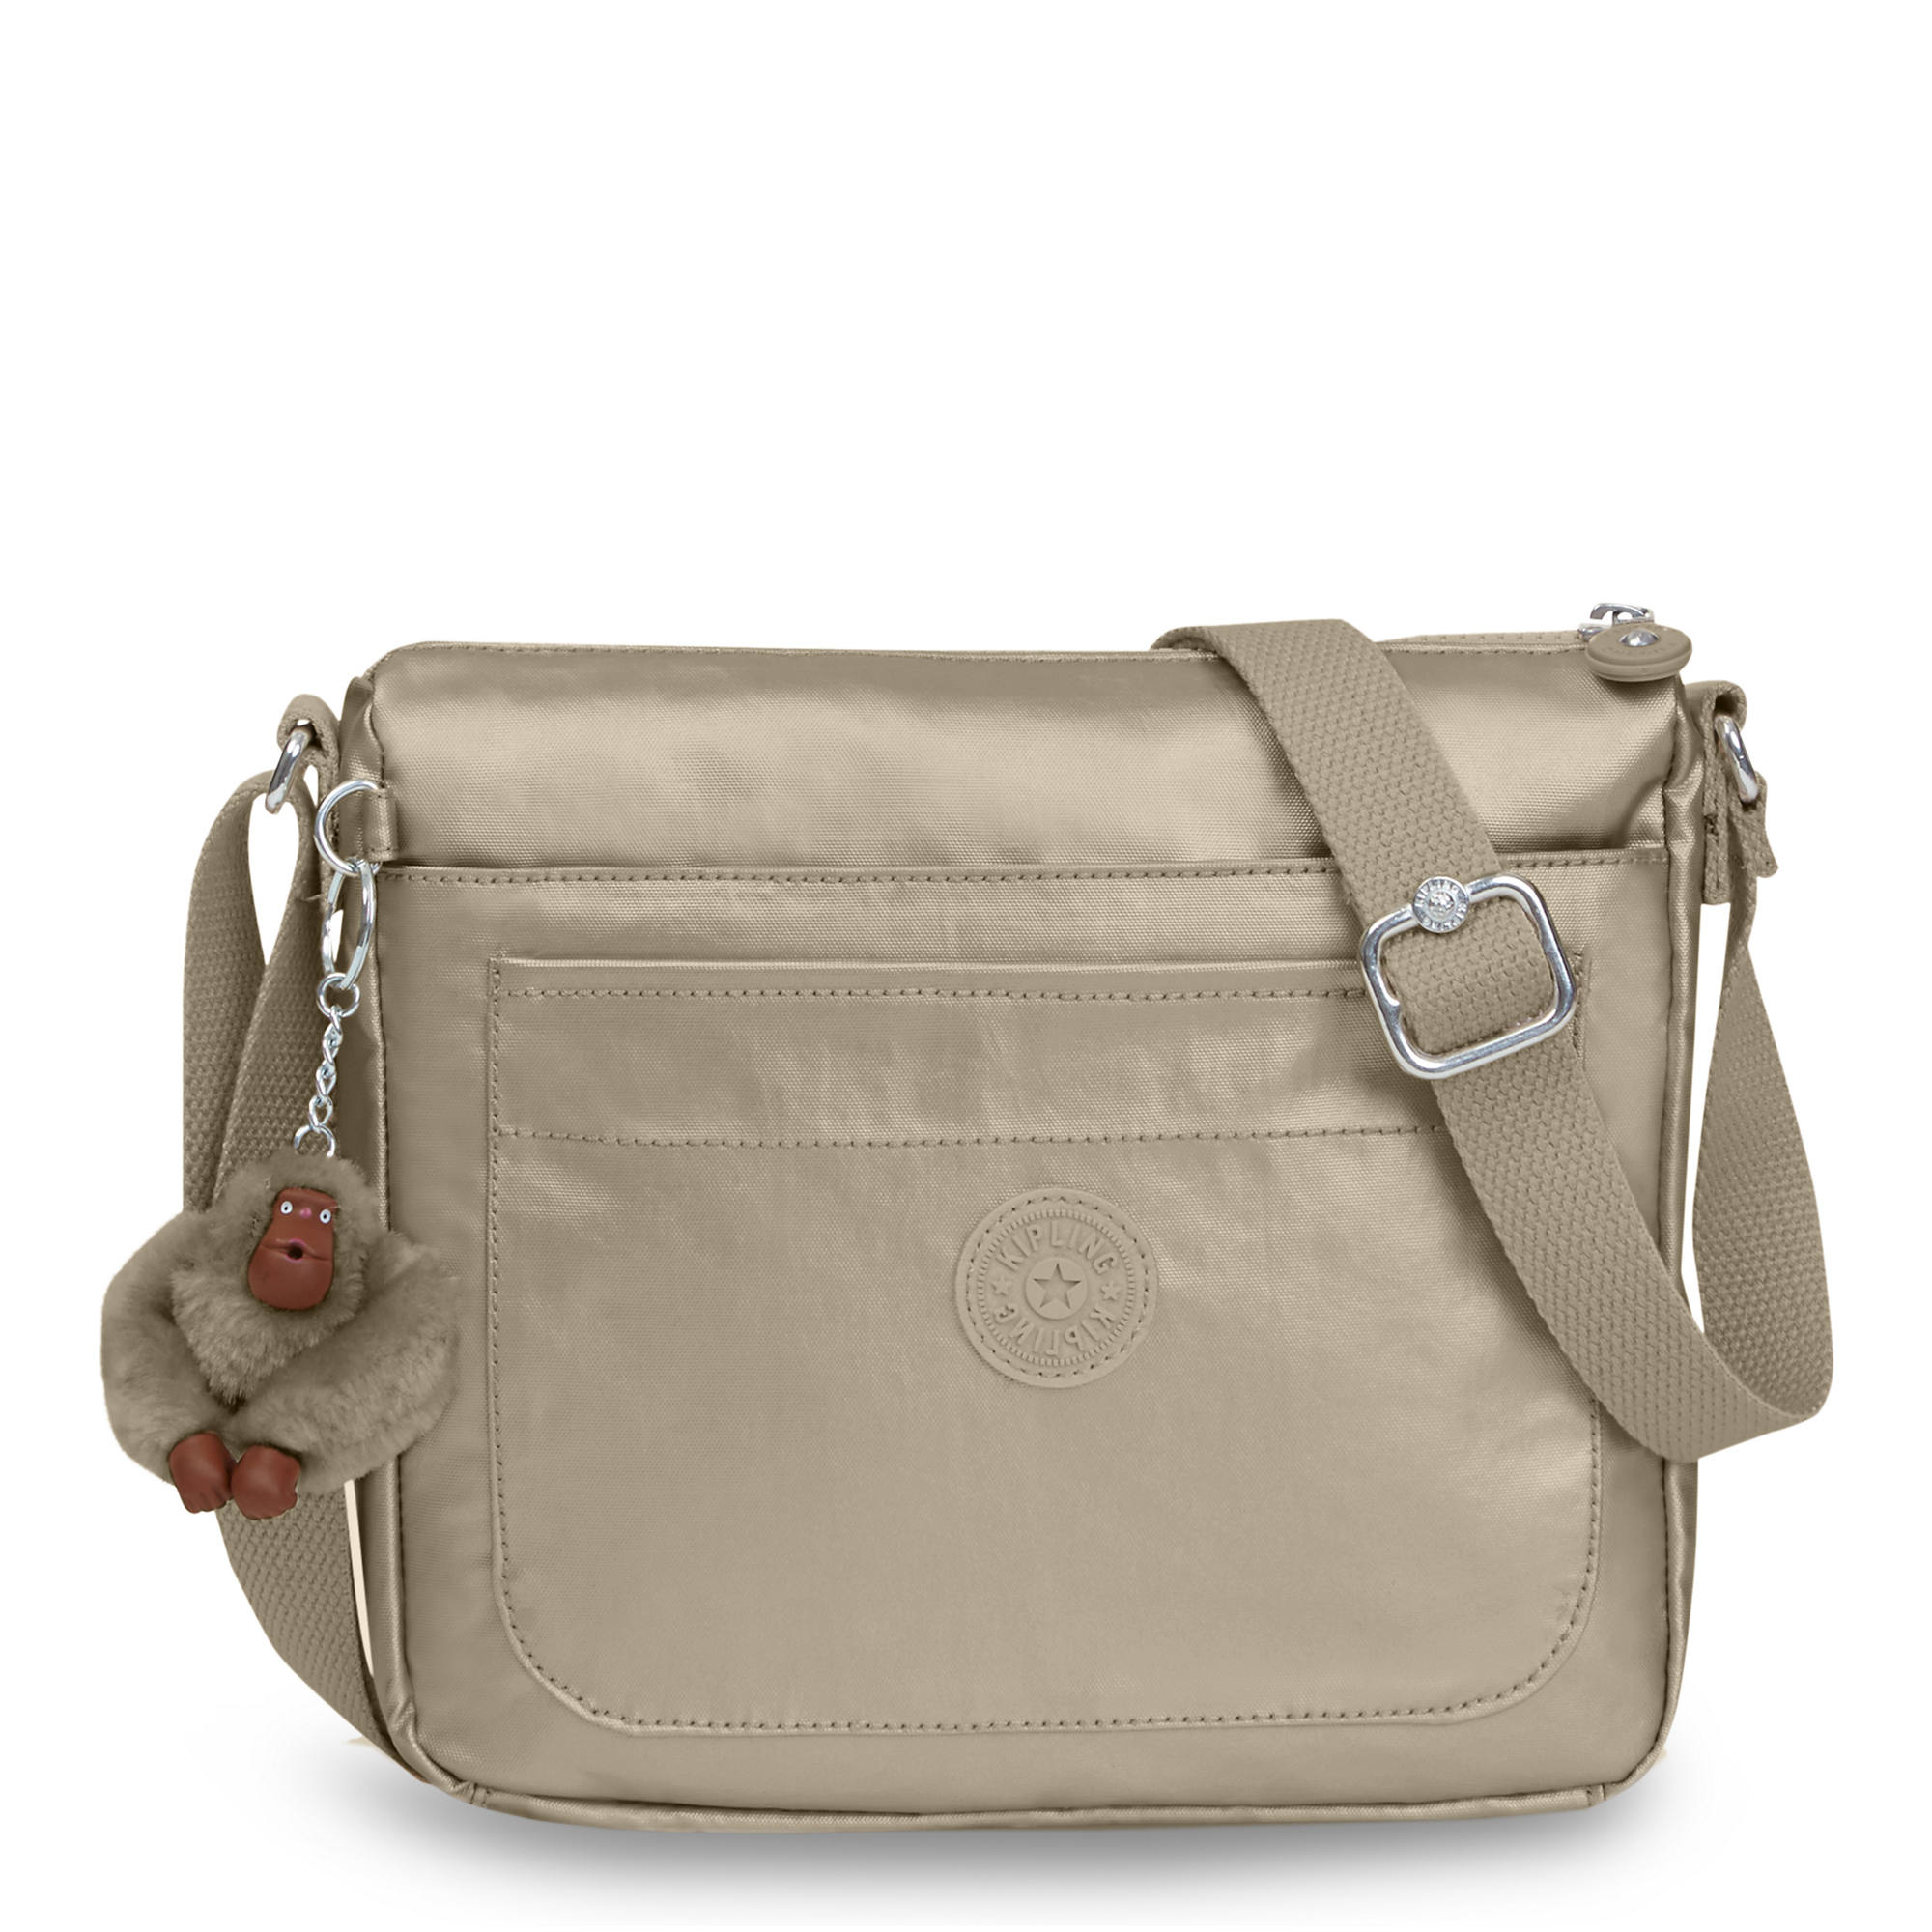 Kipling Sebastian Crossbody Bag | eBay